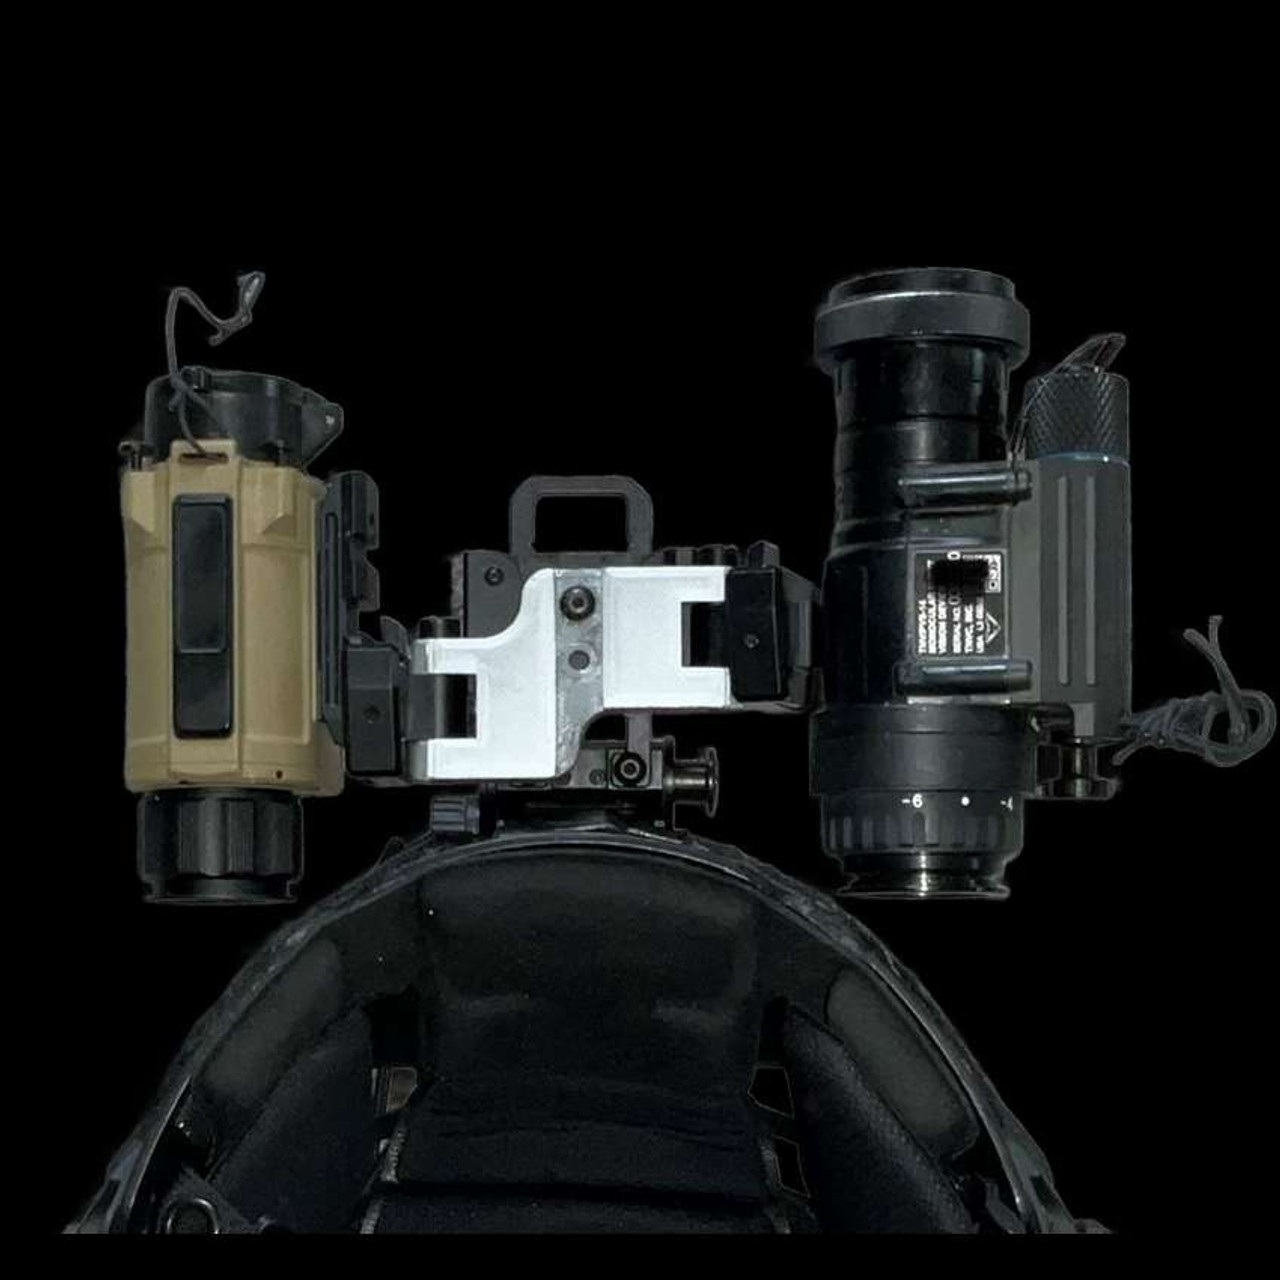 IRAY RICO Mini RH 25/RL 25 – PVS 14 bridge adapter for Mod Armory (PRE-ORDER Deposit) Dark Night Outdoors MG2514 150